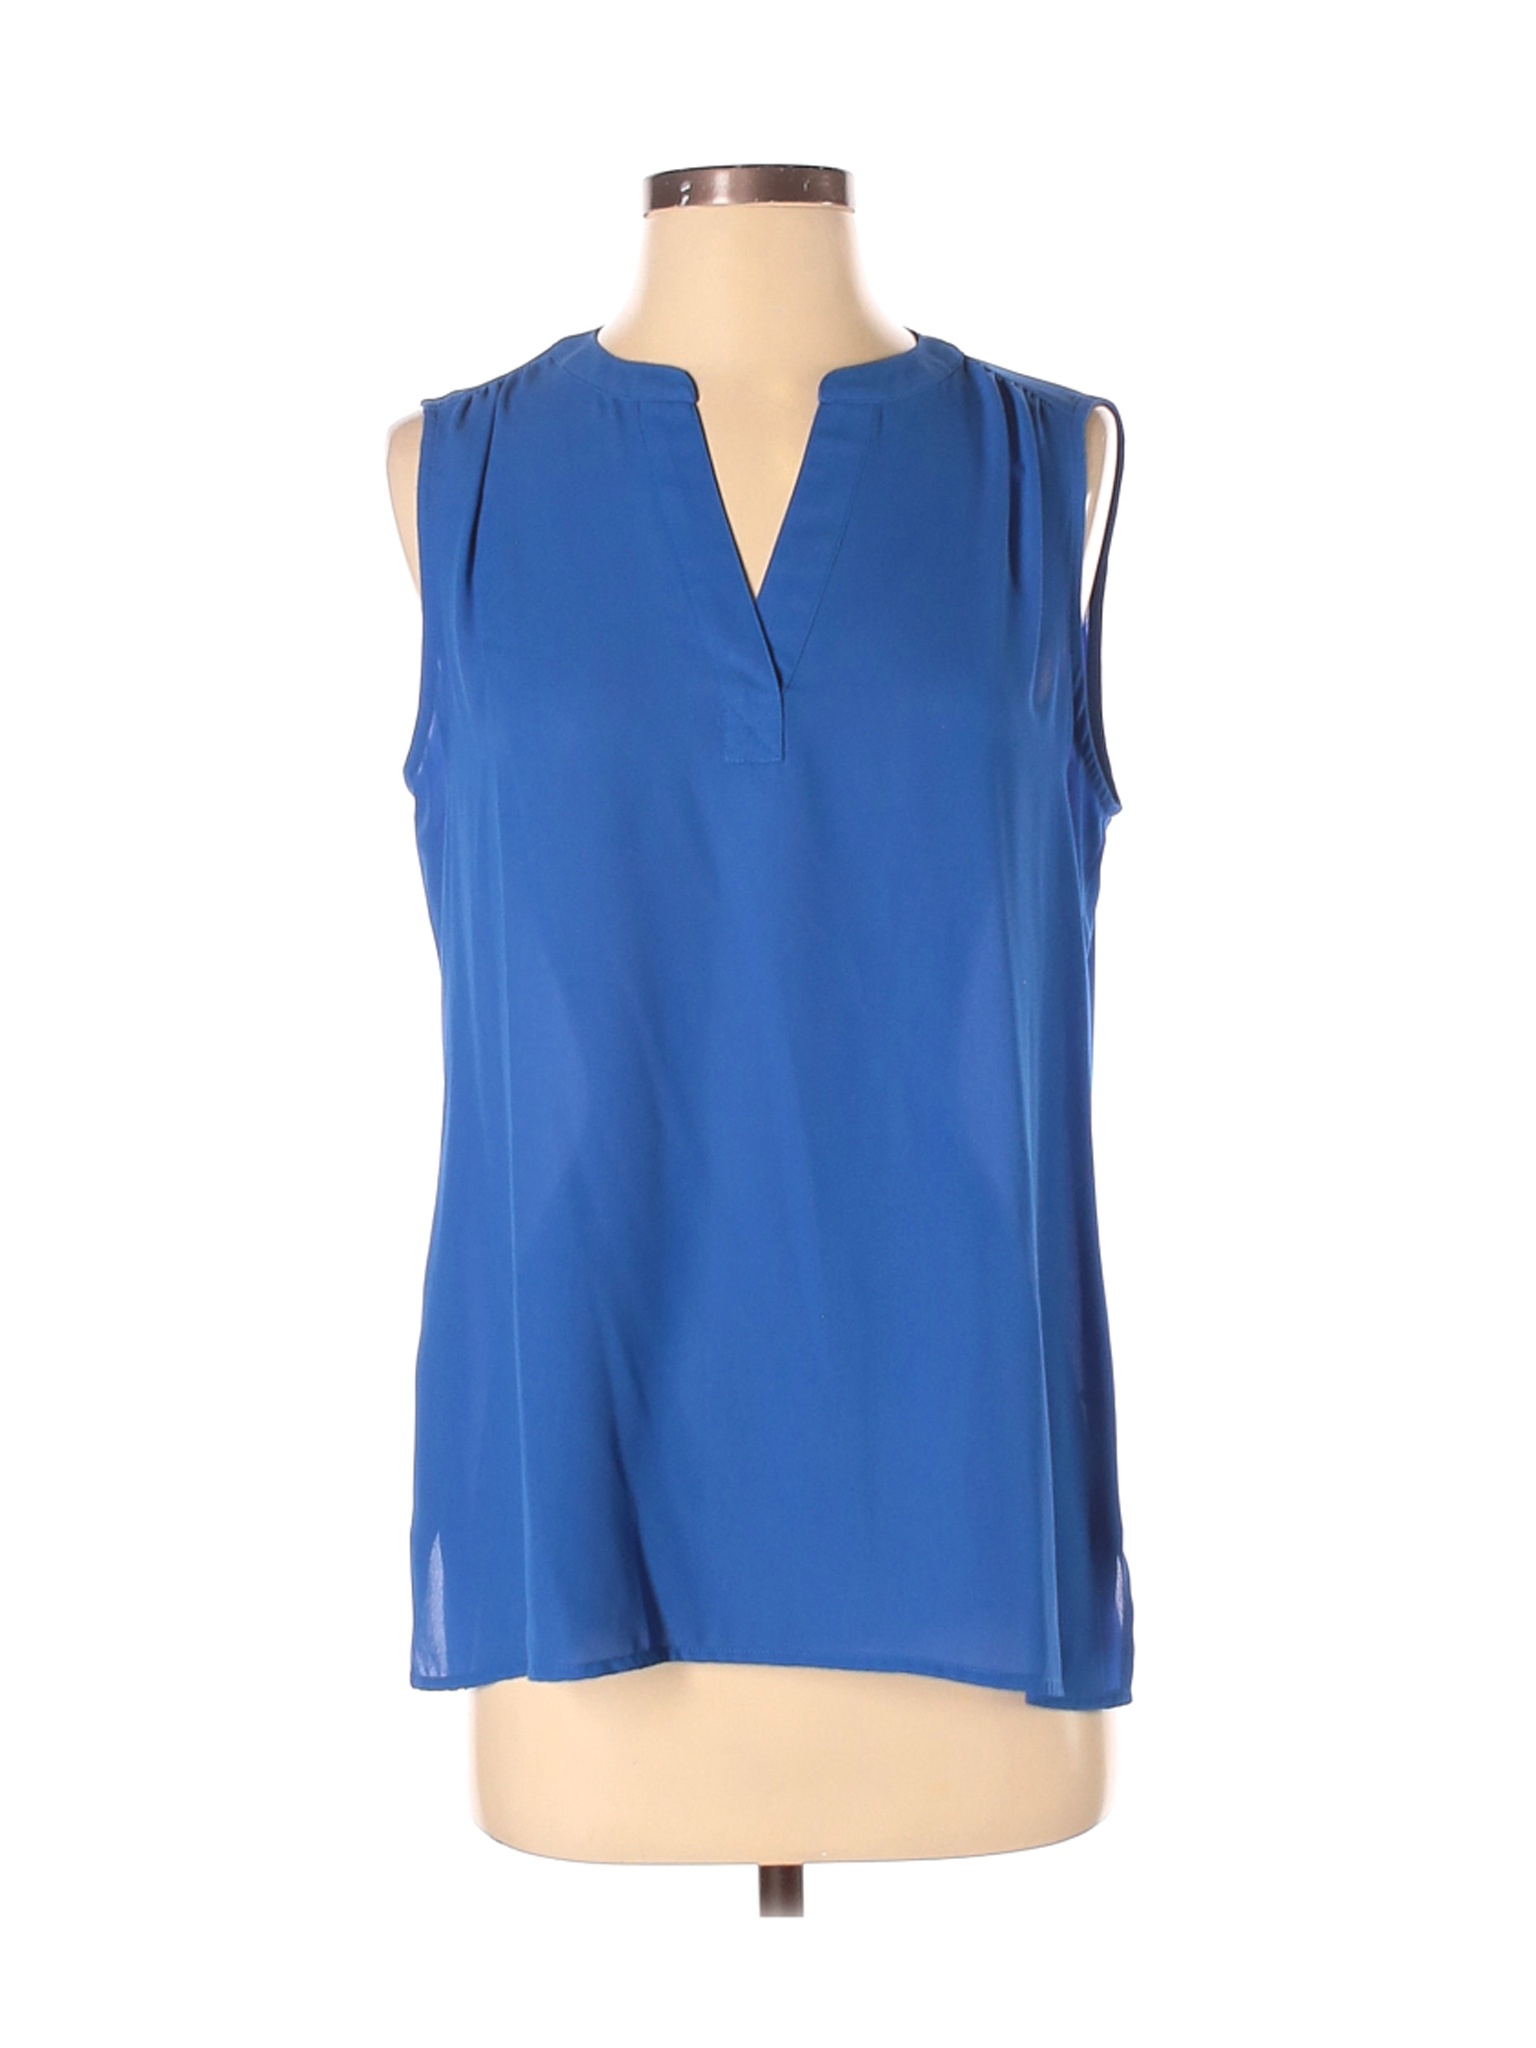 Chaus Women Blue Sleeveless Blouse S | eBay